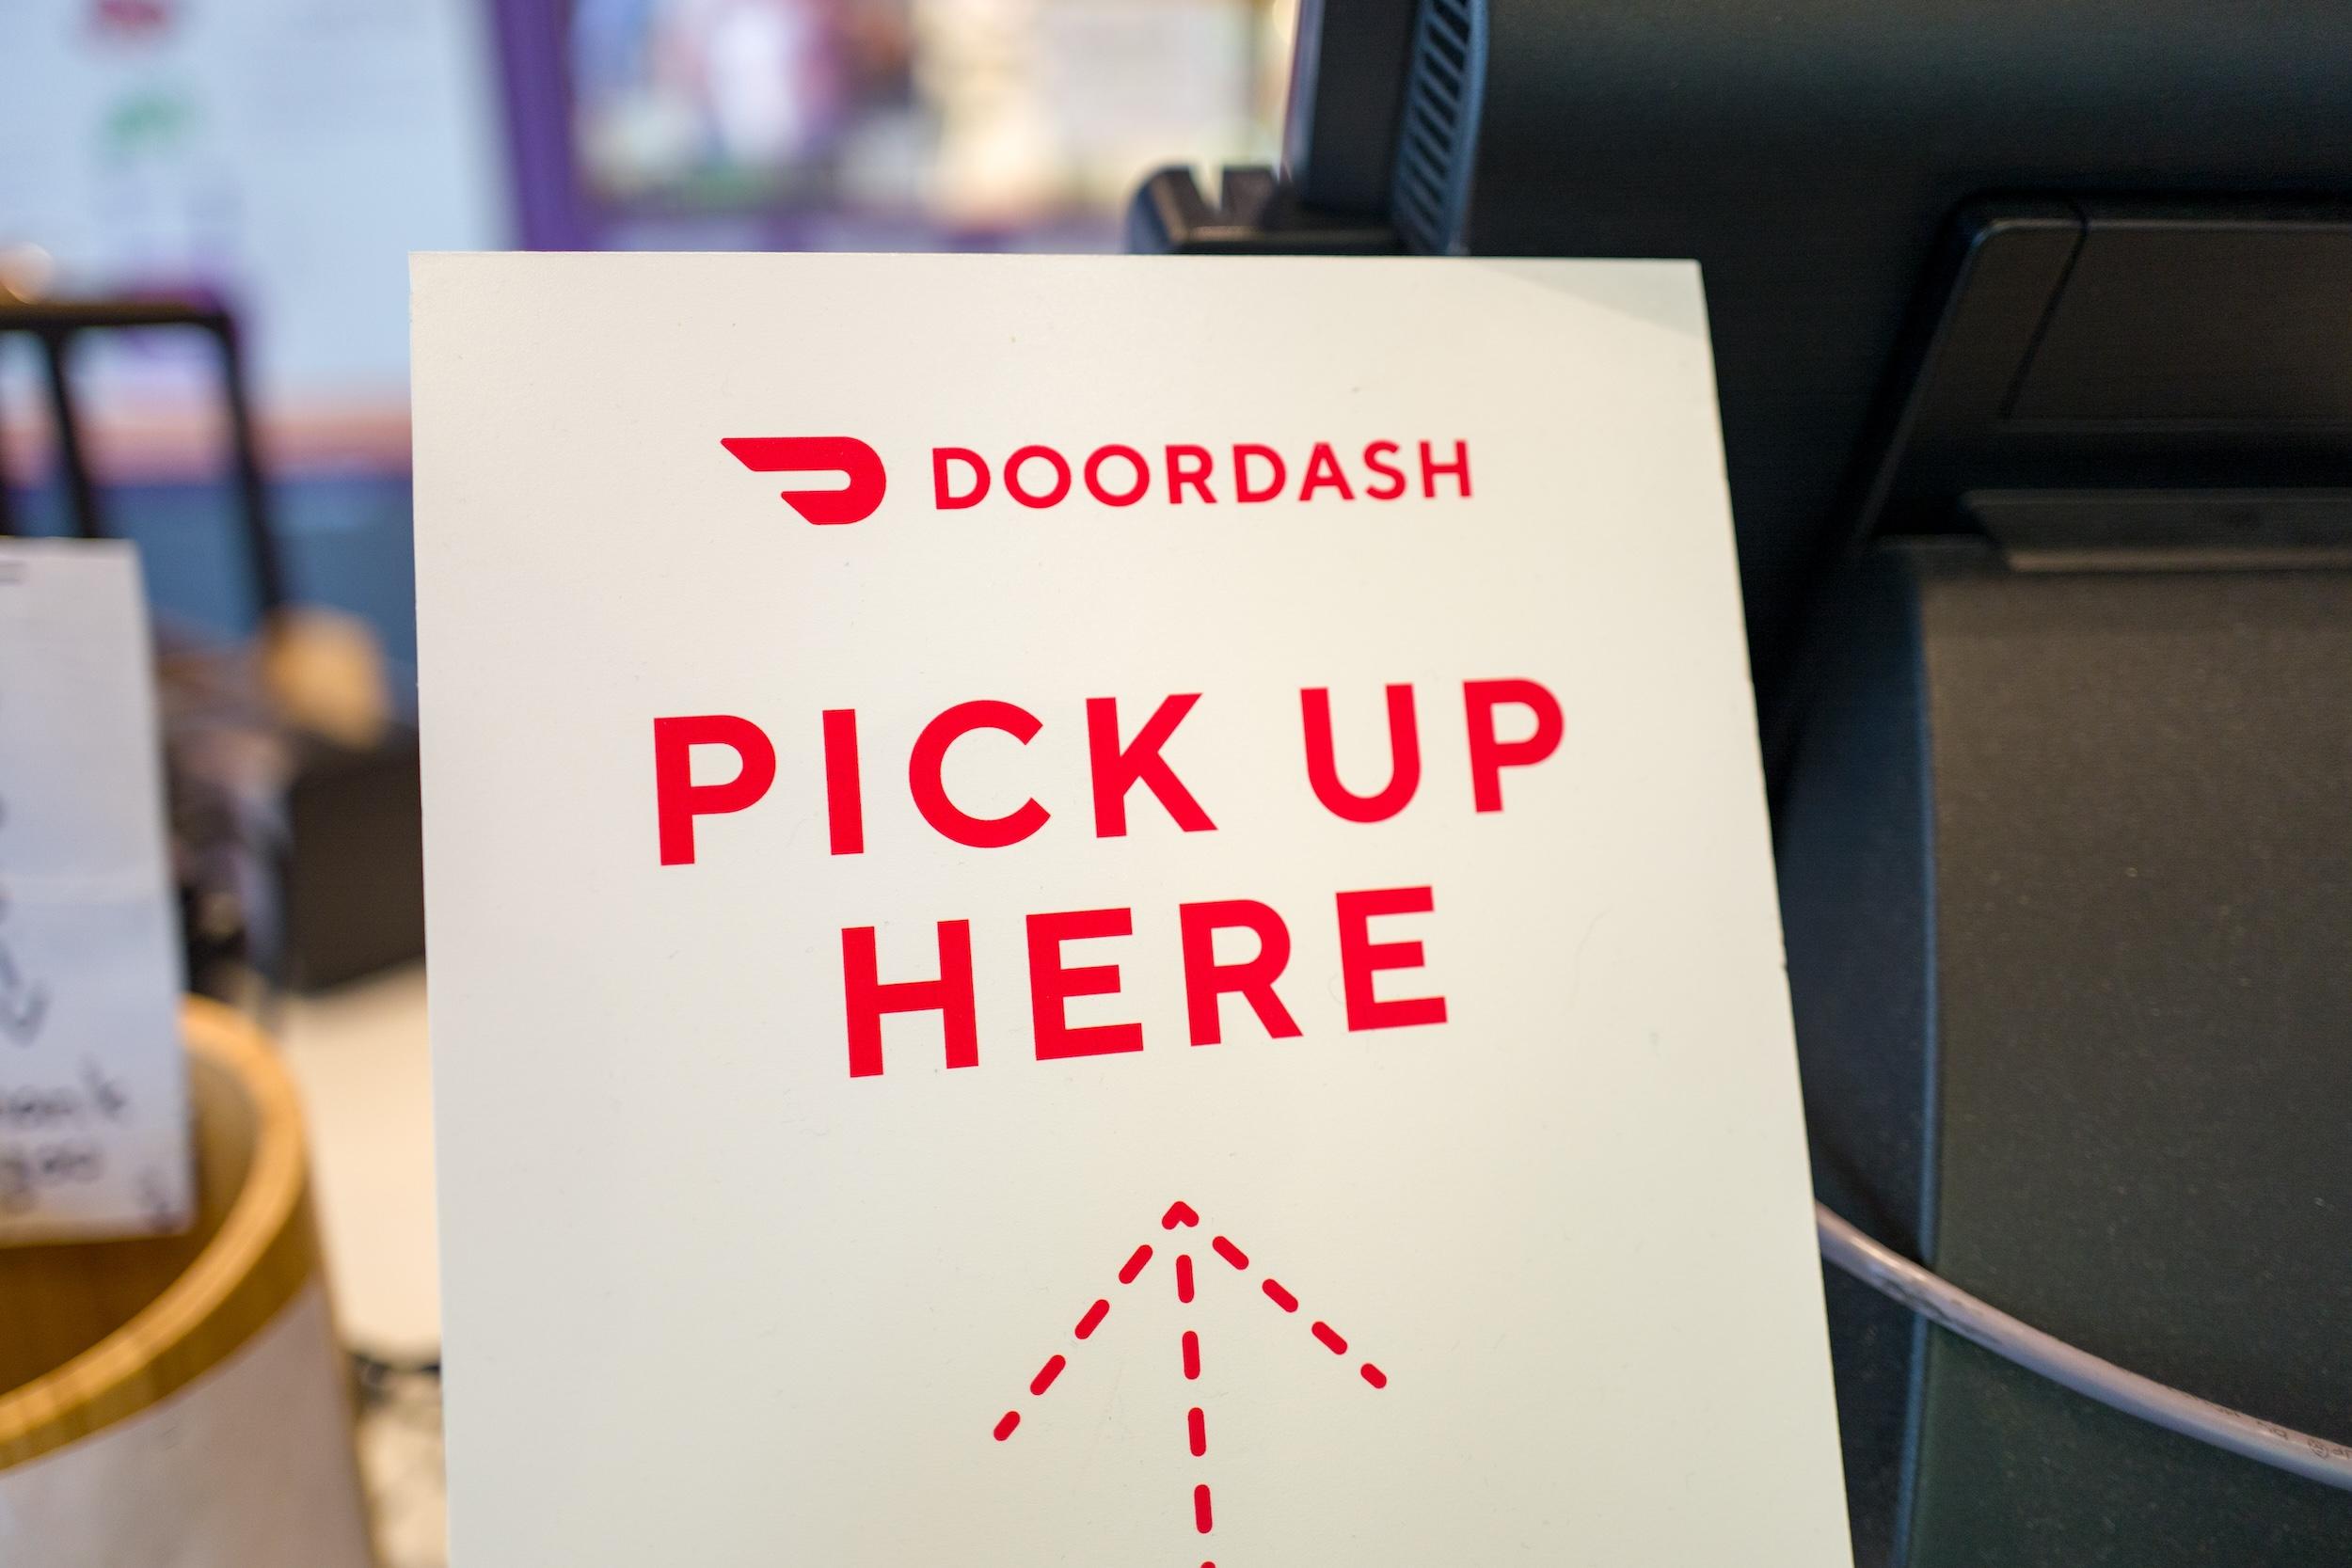 A DoorDash "Pick Up Here" sign